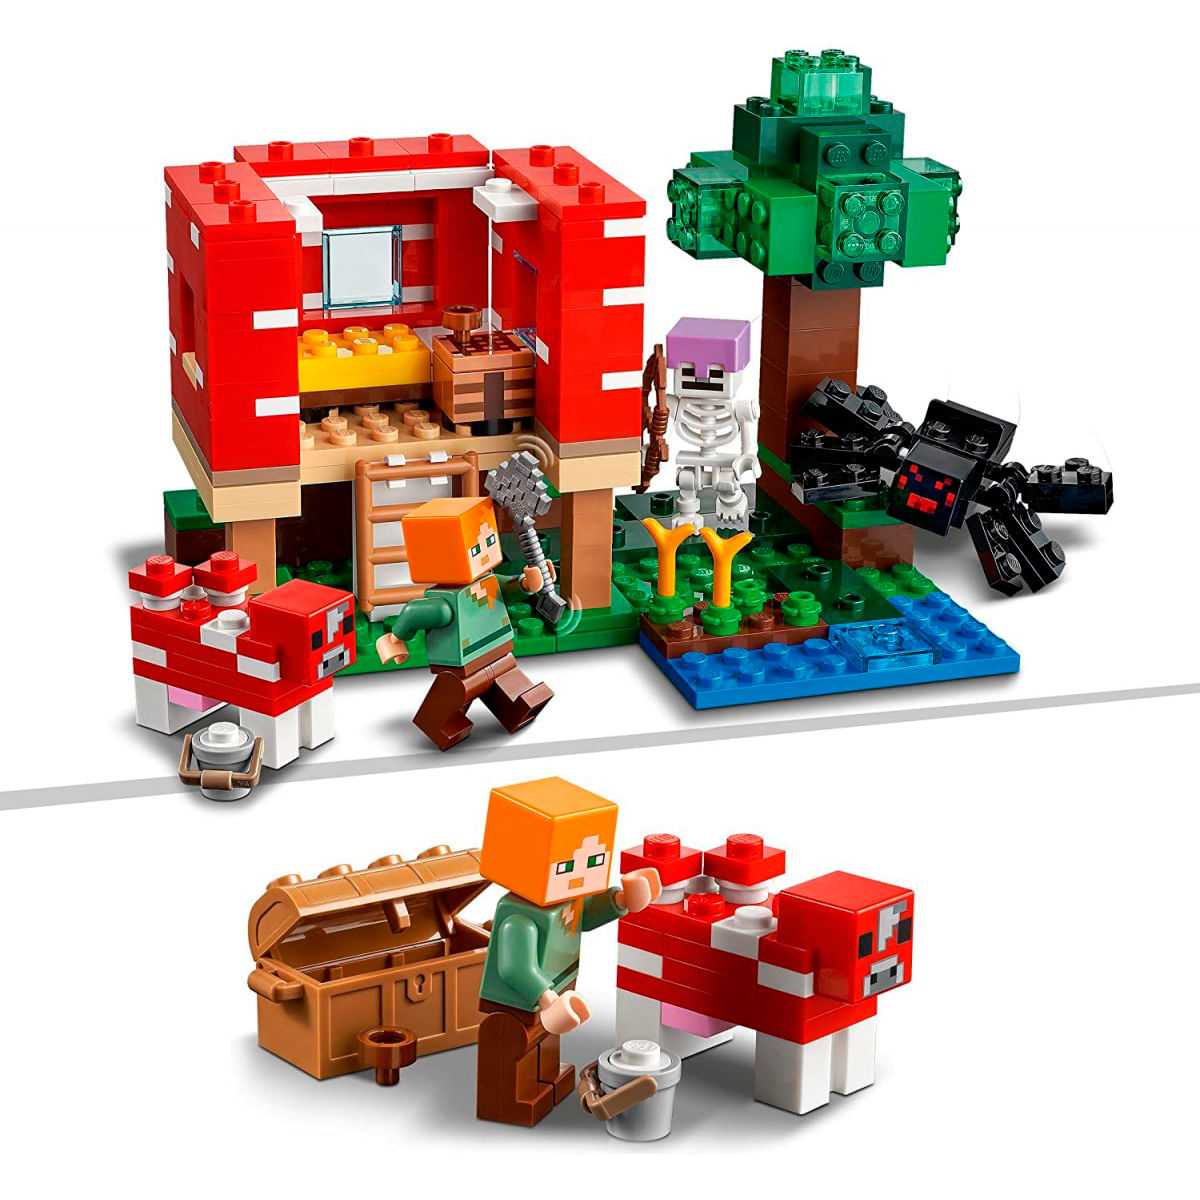 Set LEGO Minecraft La Casa-Champiñón 21179